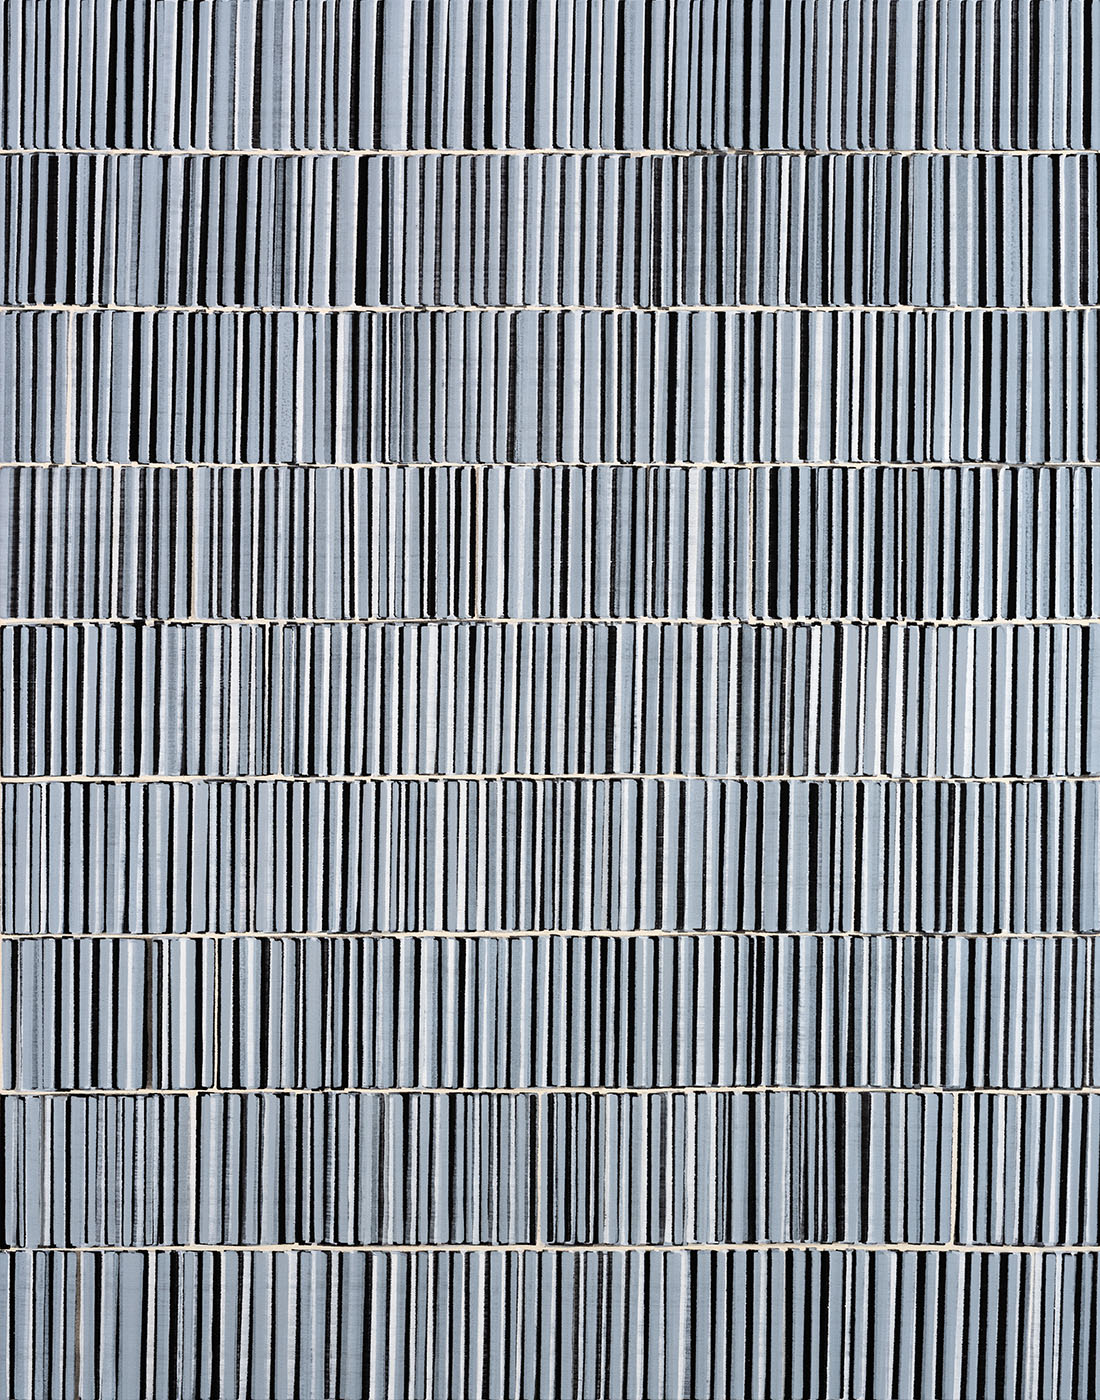 Nikola Dimitrov, Fuge VII, 2021, Pigmente, Bindemittel auf Leinwand, 140 × 110 cm